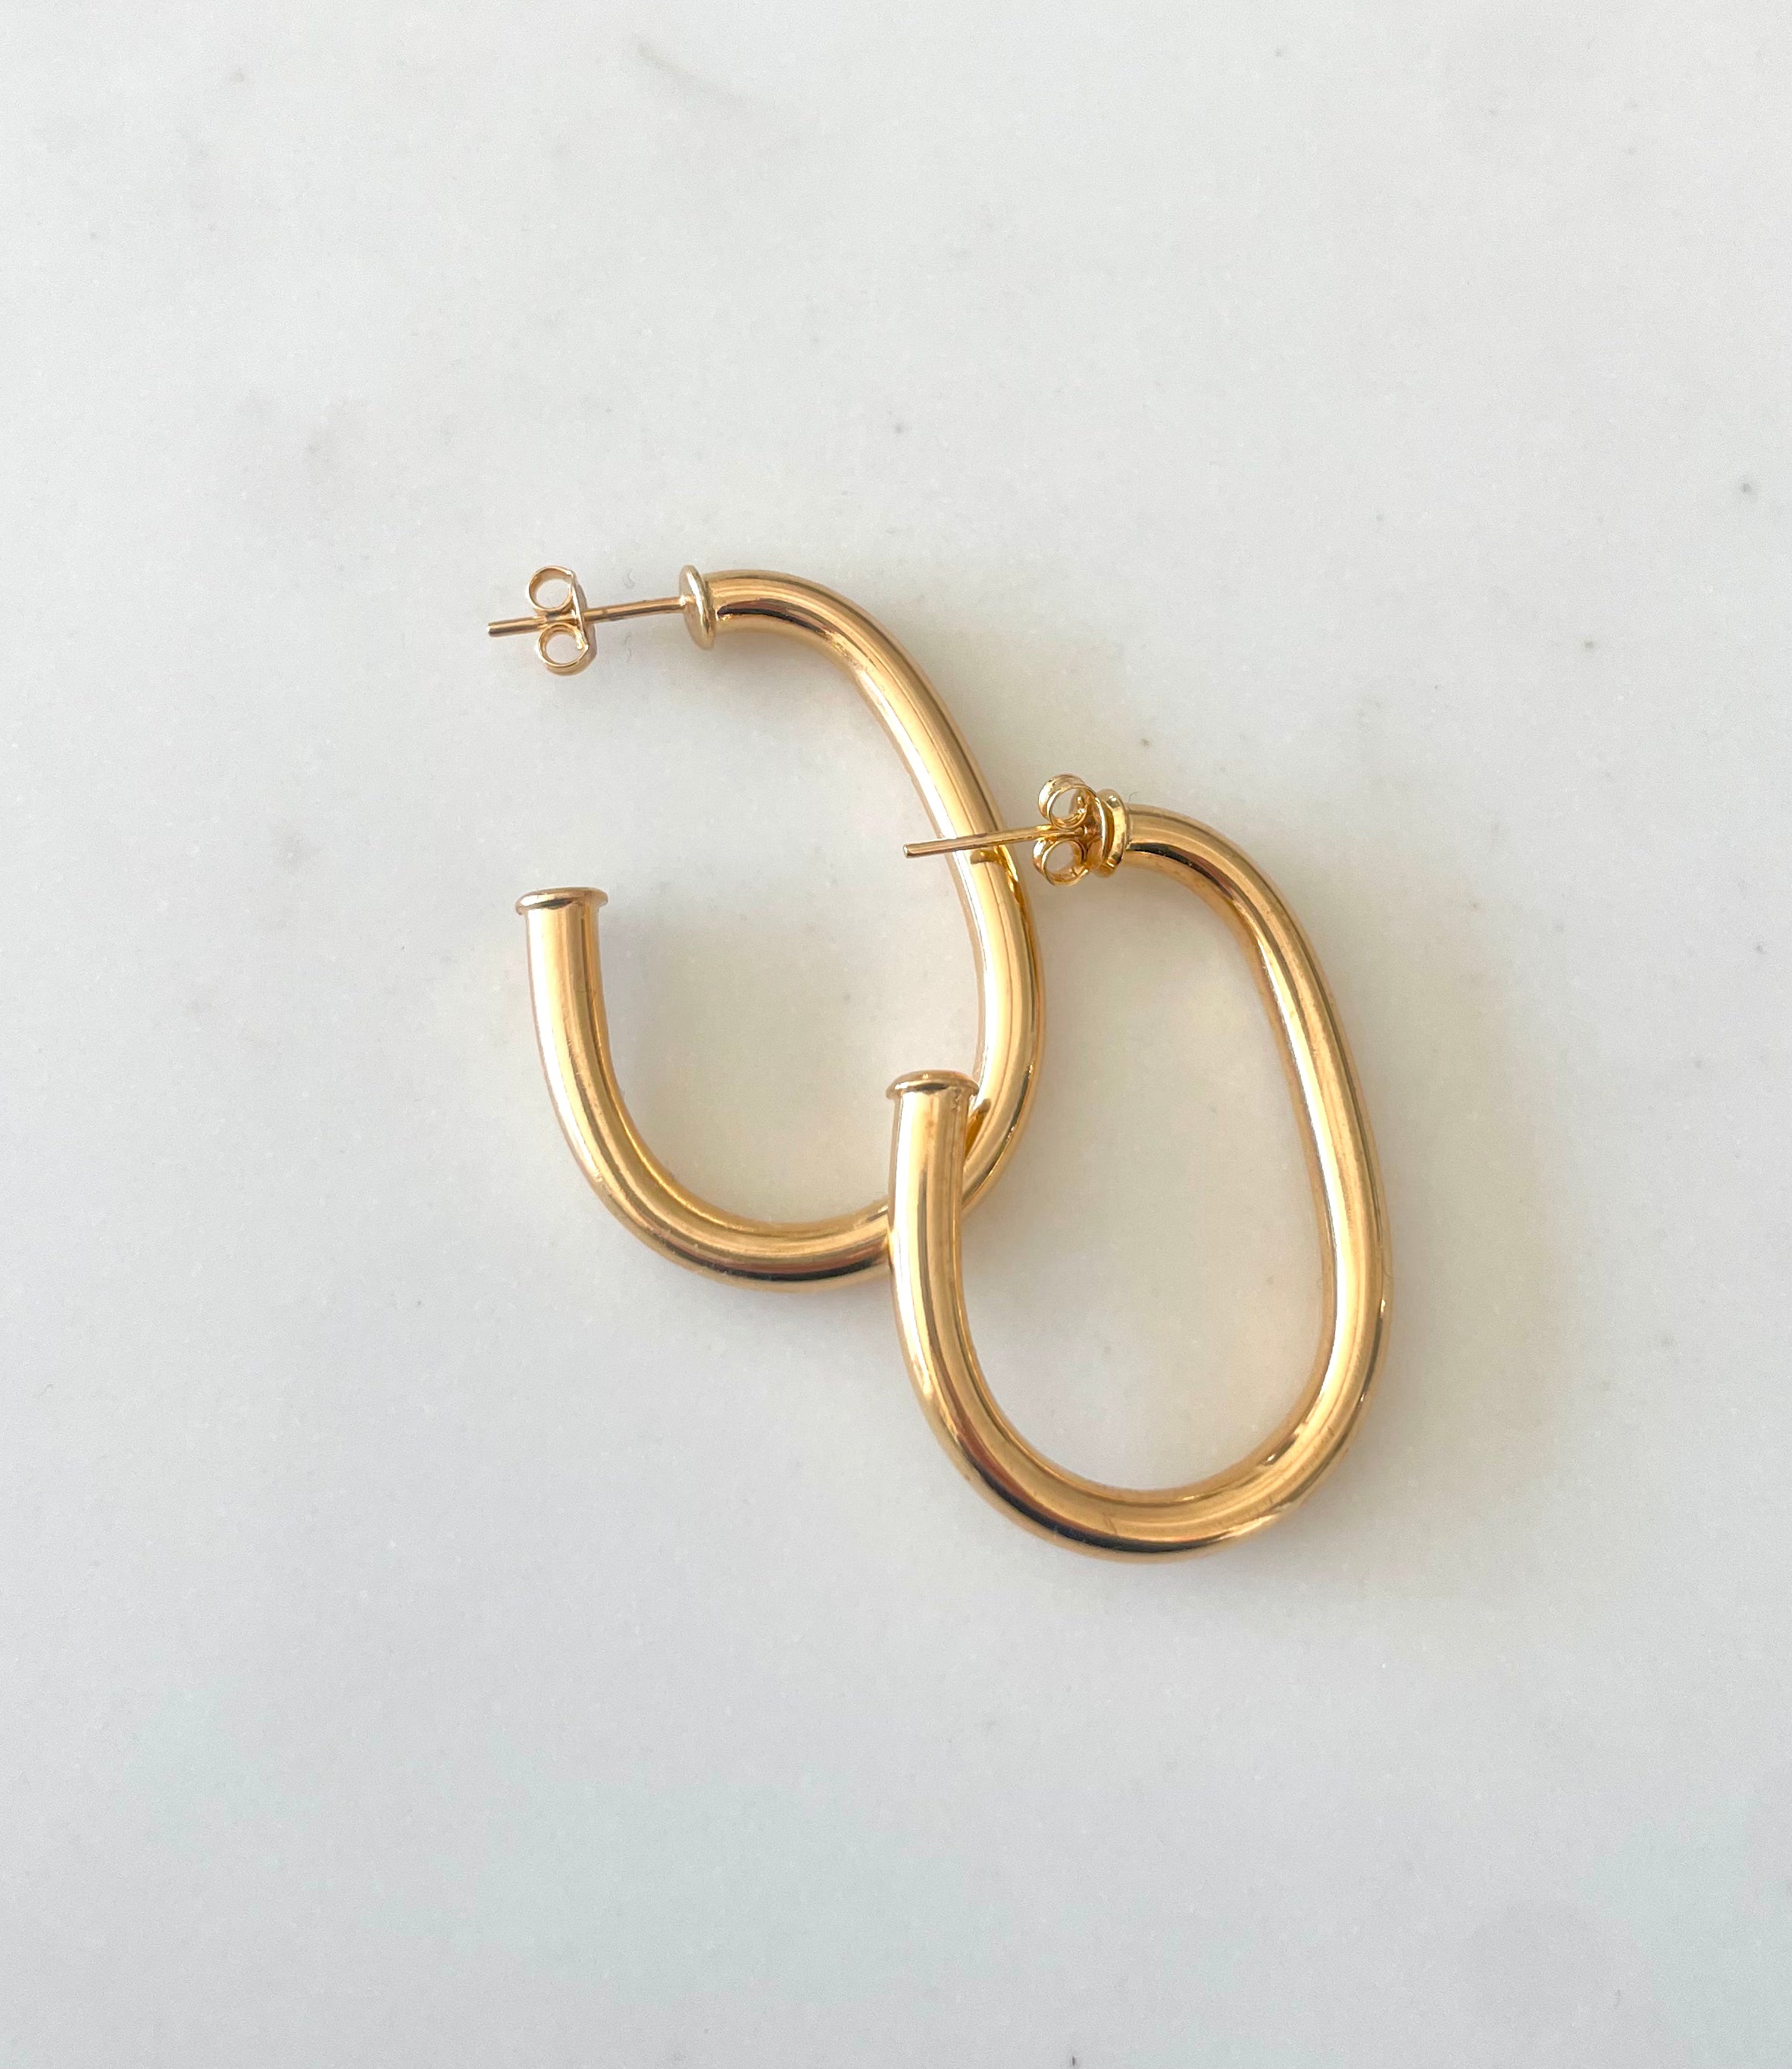 Elongated Oval Hoop Earrings